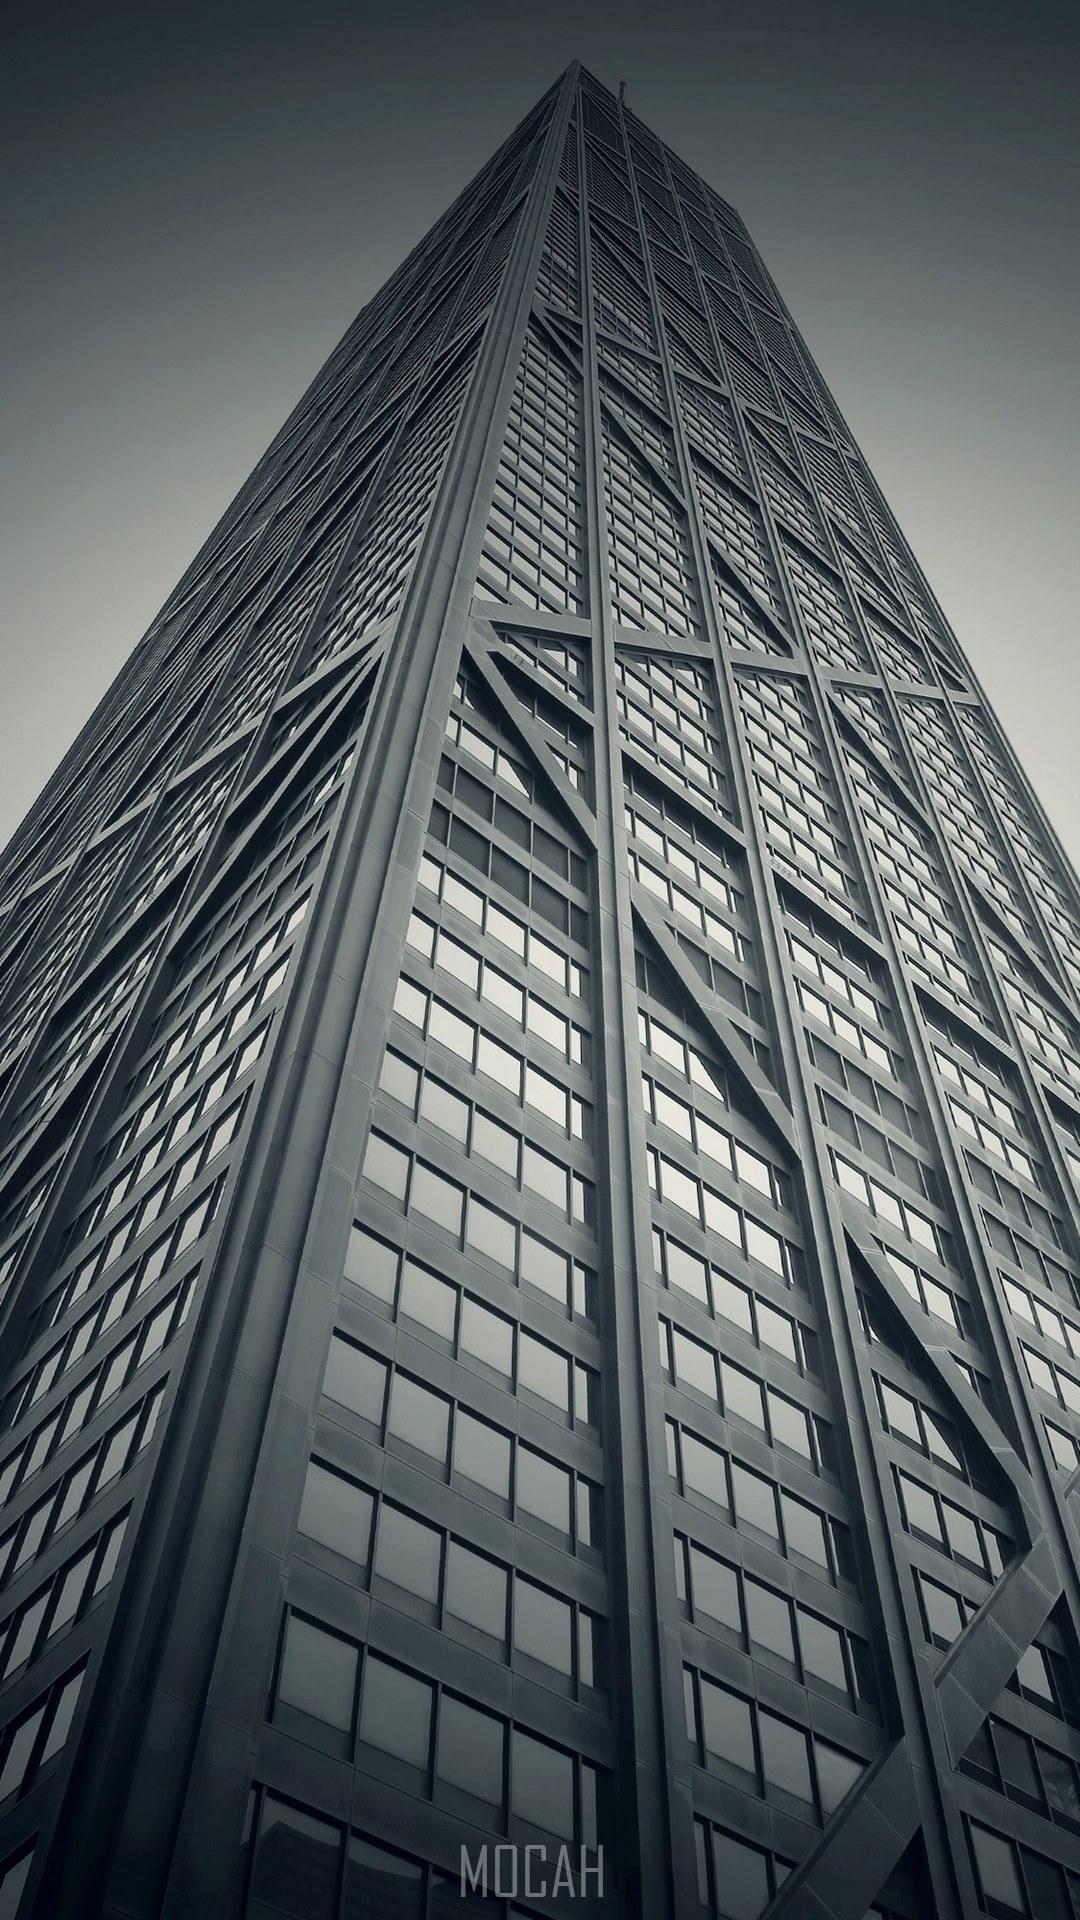 HD wallpaper, Criss Cross Skyscraper Wall, 1080X1920, A Desaturated Shot Of A Tall Skyscraper, Huawei Mate 9 Screensaver